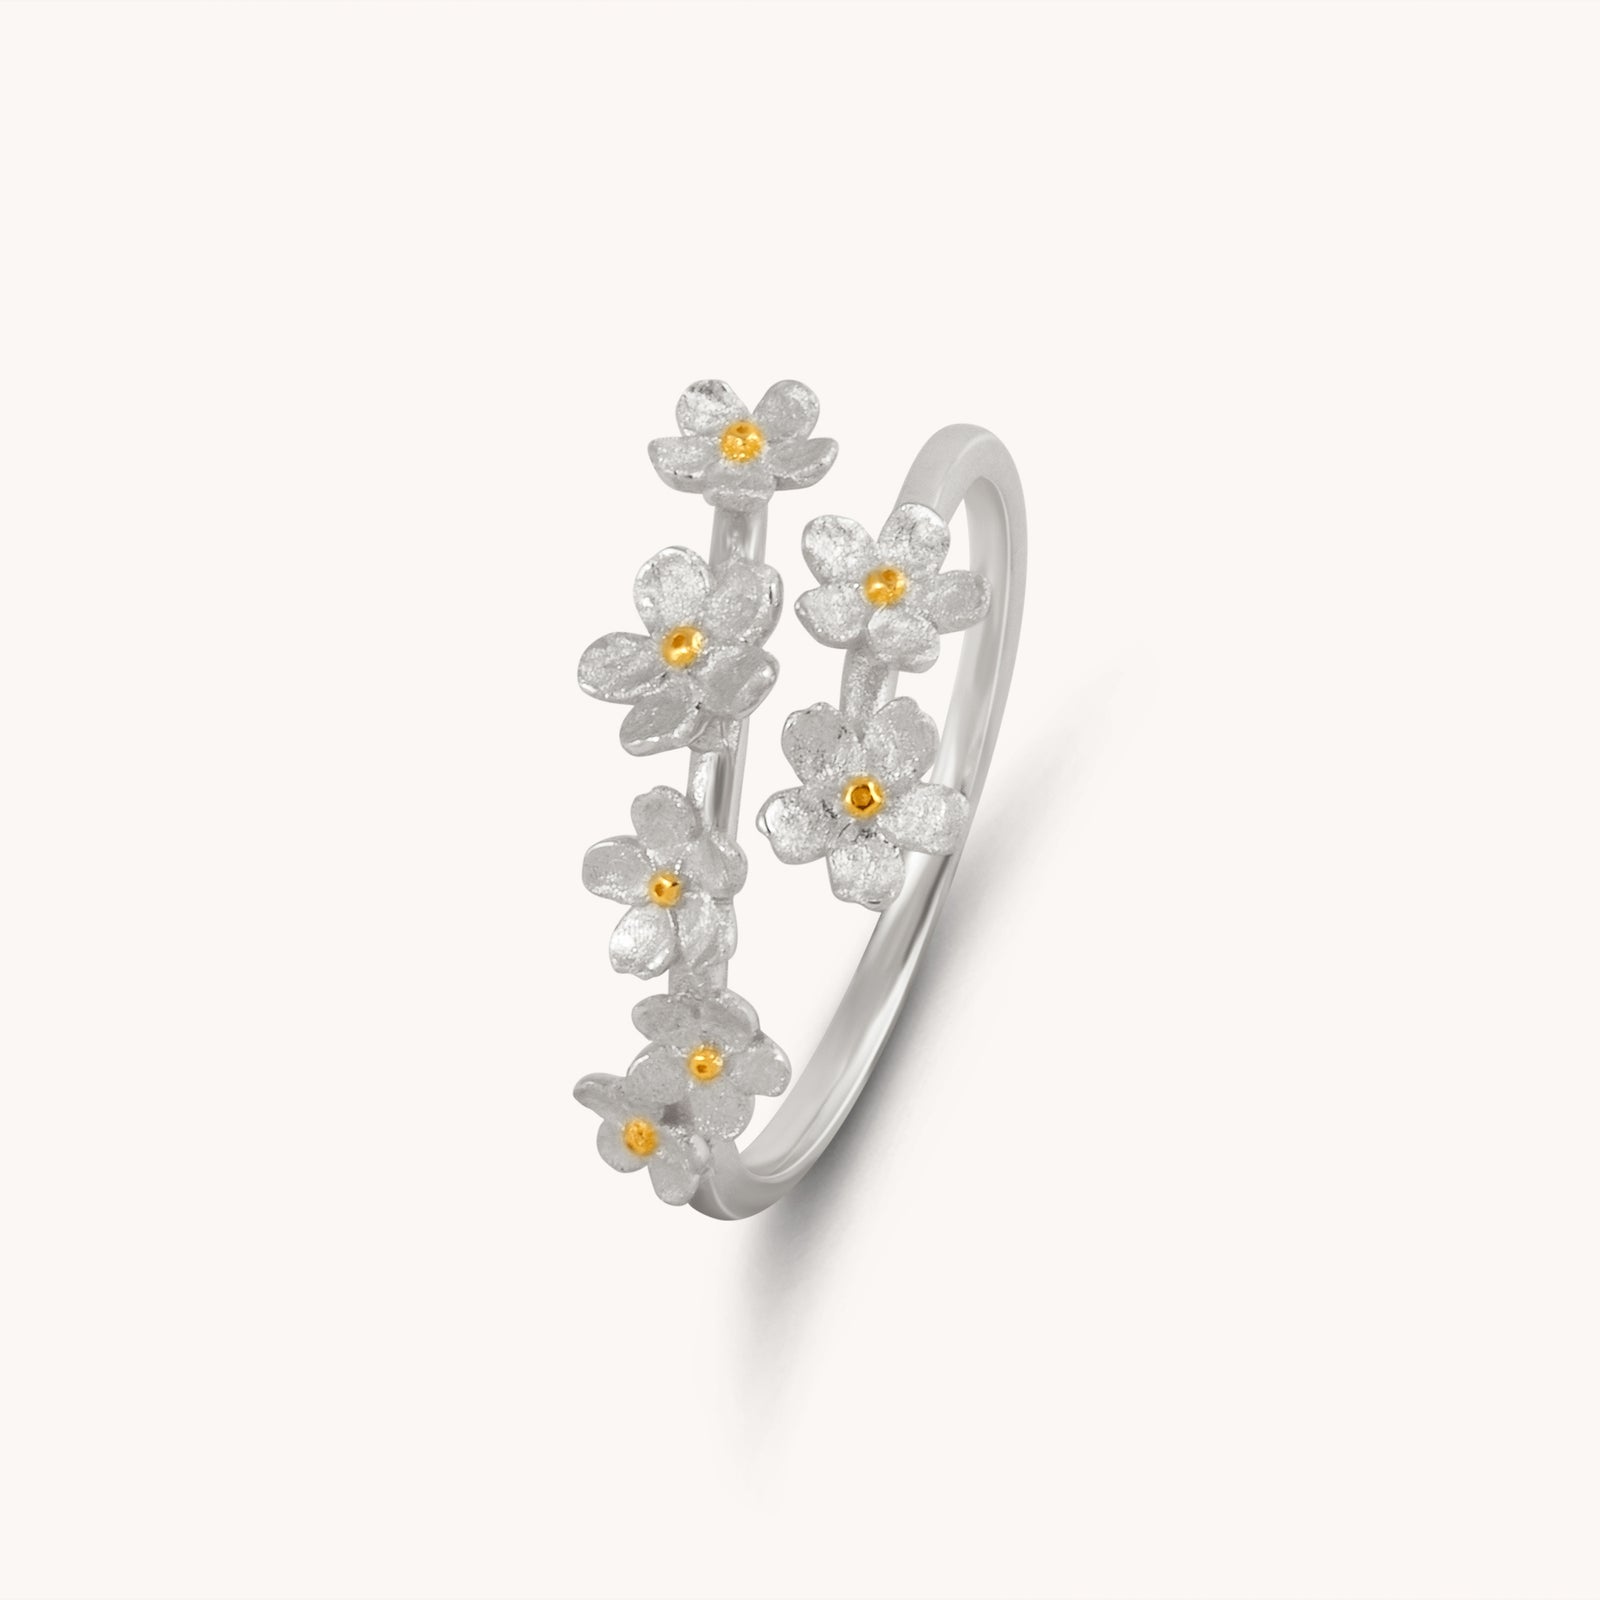 Cherry Blossom Cascade Gold Pendant With Chain - Gratinsta